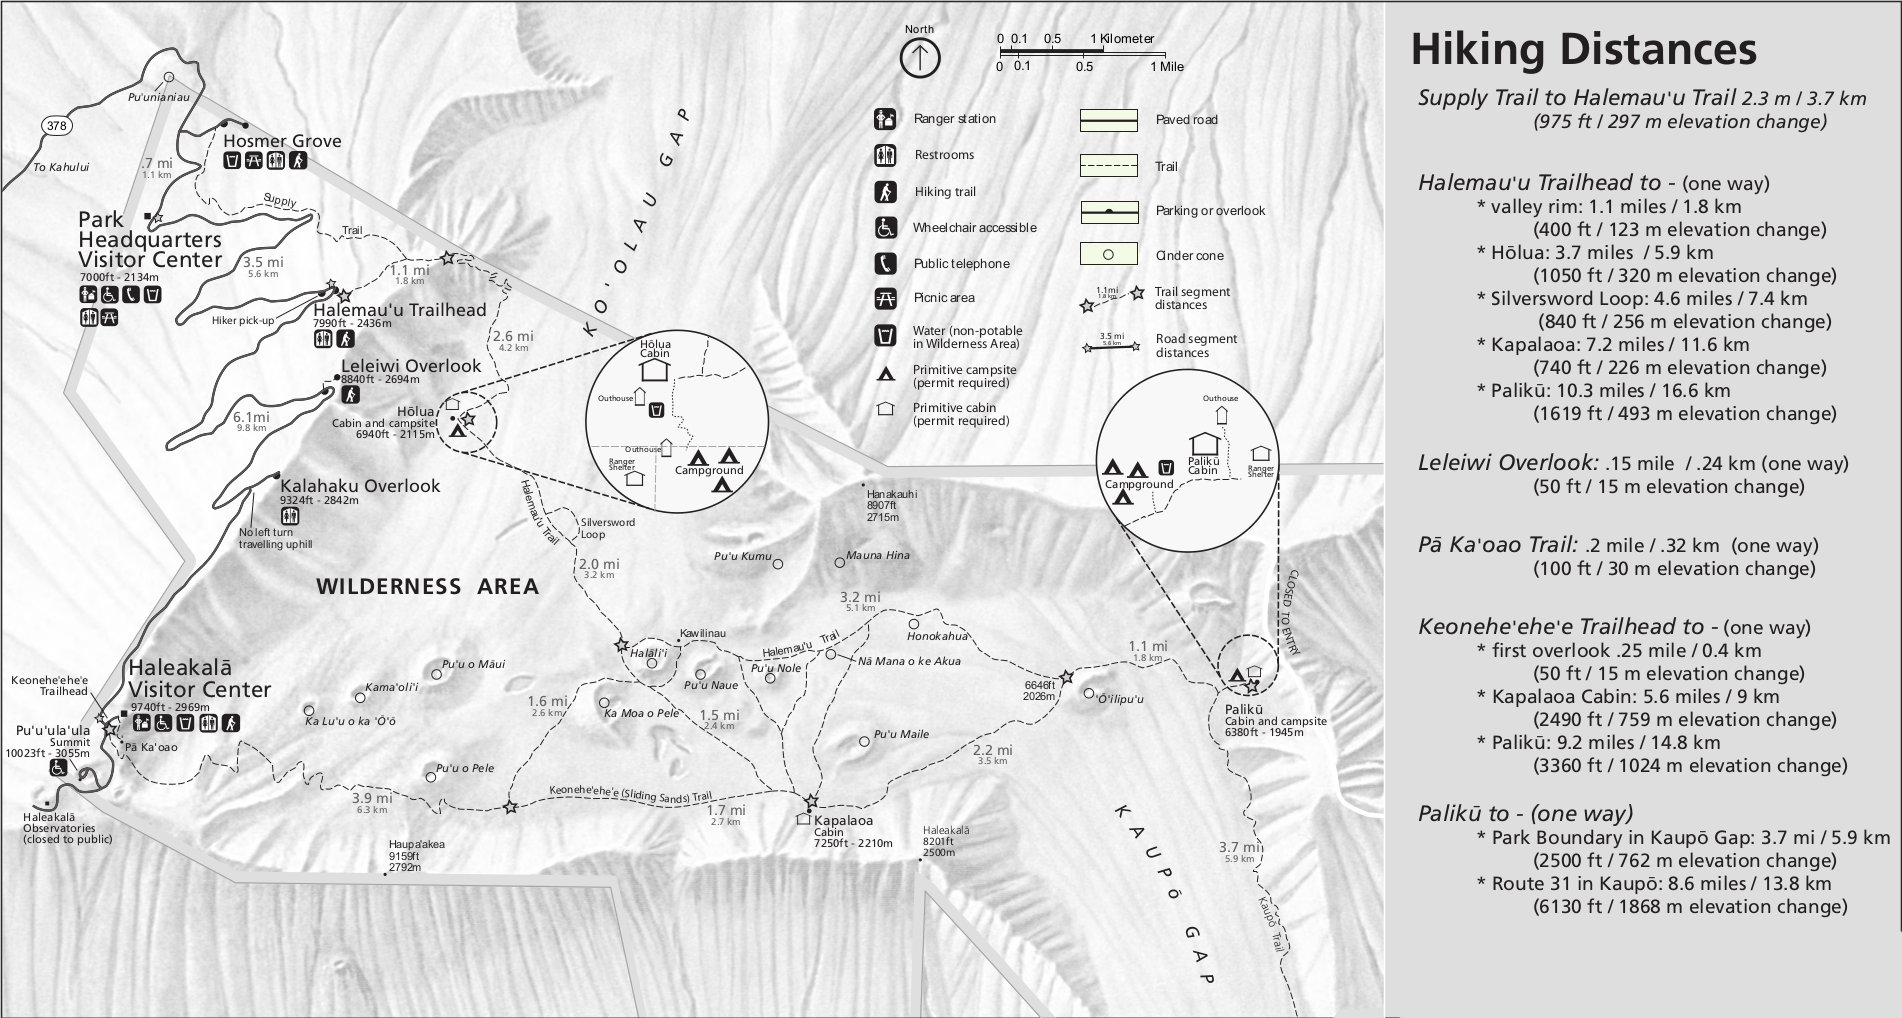 Haleakala Maps Just Free Maps Period